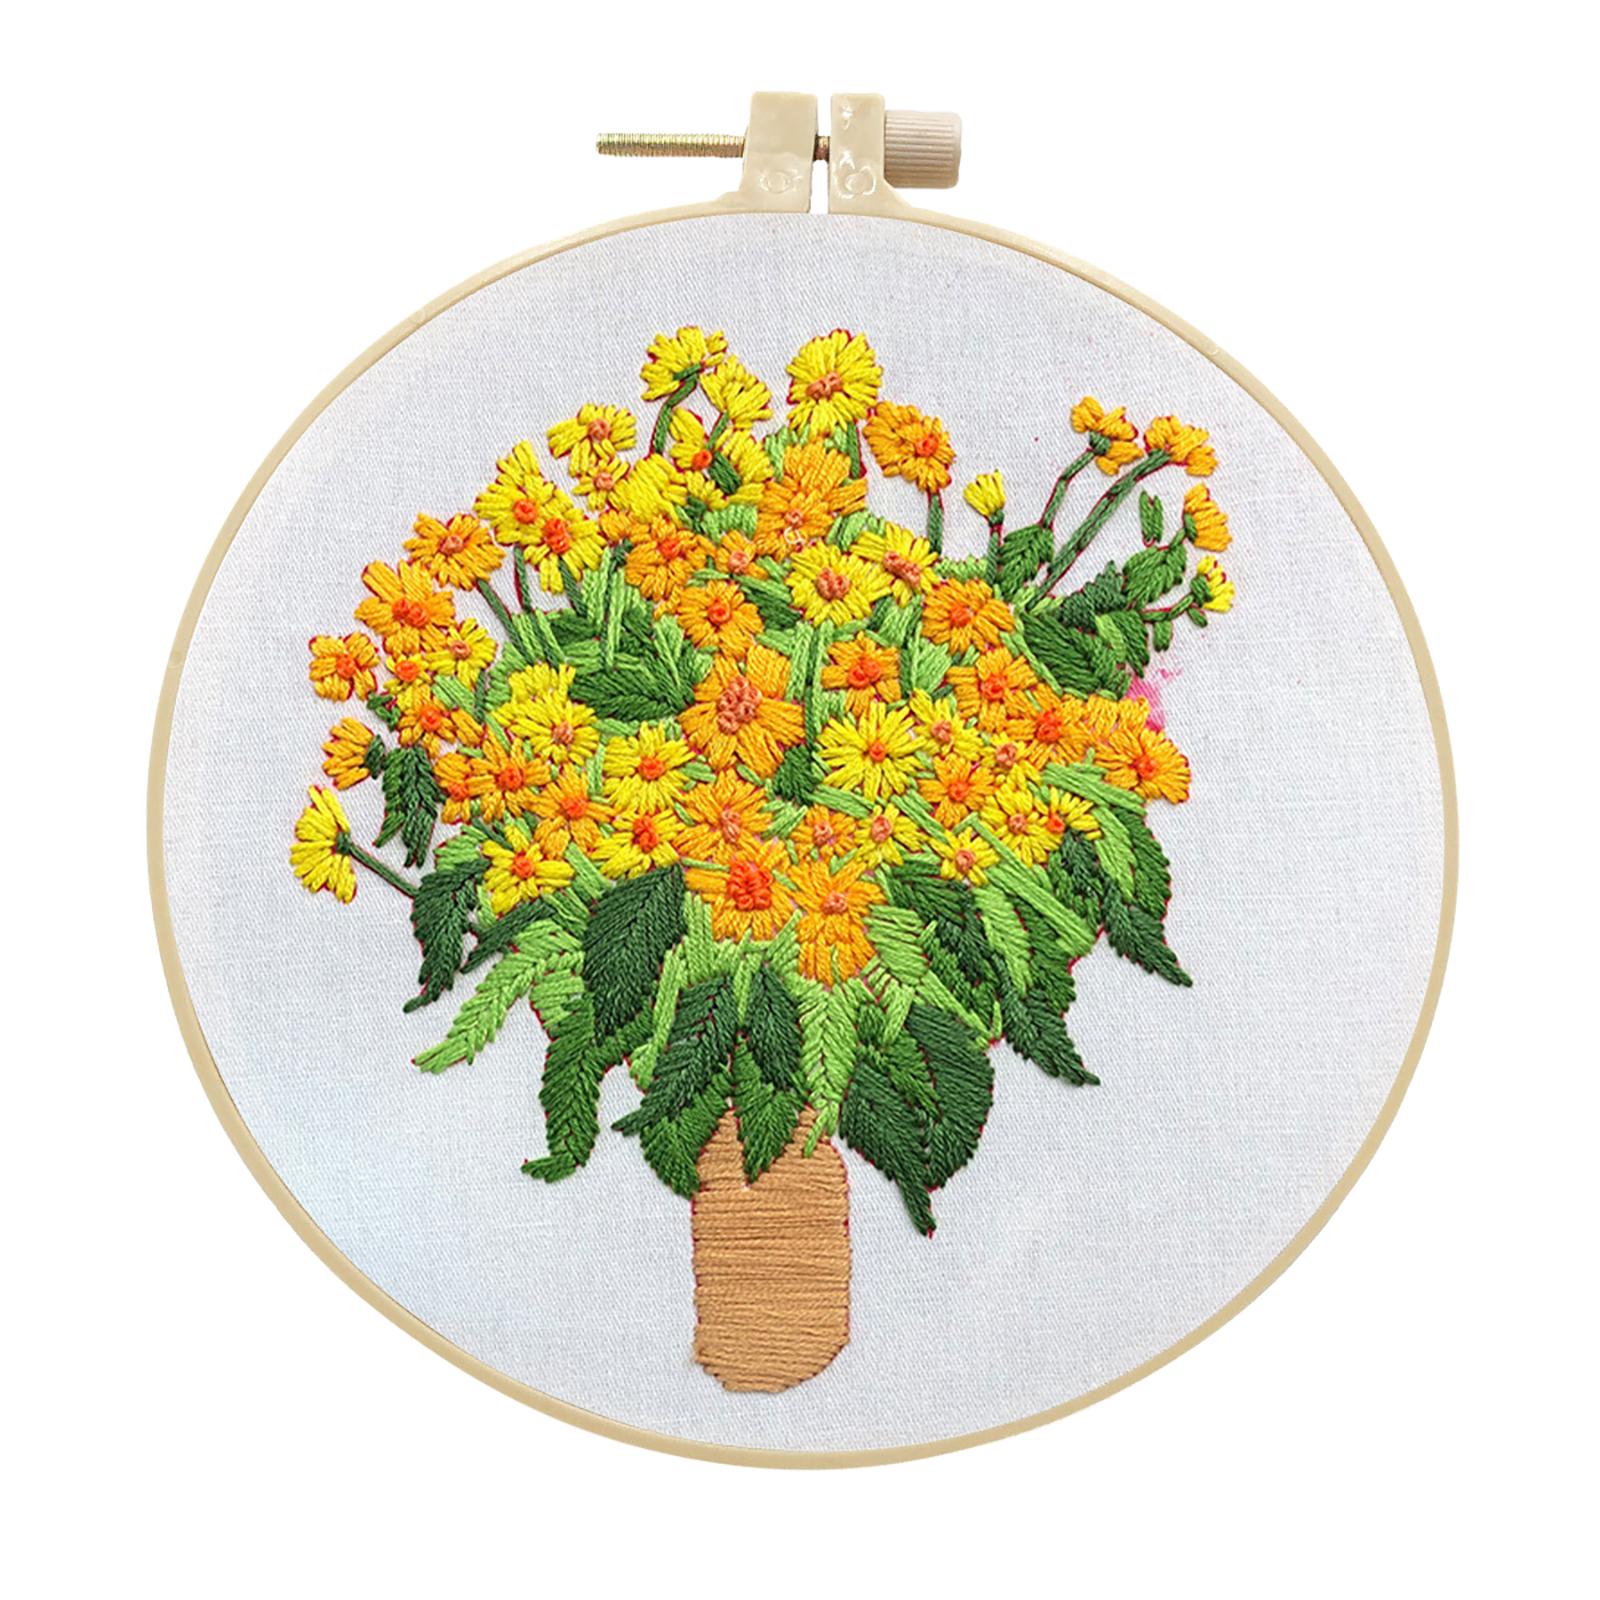 Embroidery Kit Handmade Cross stitch kit for Adult Beginner - Van Gogh Wild Chrysanthemum Pattern